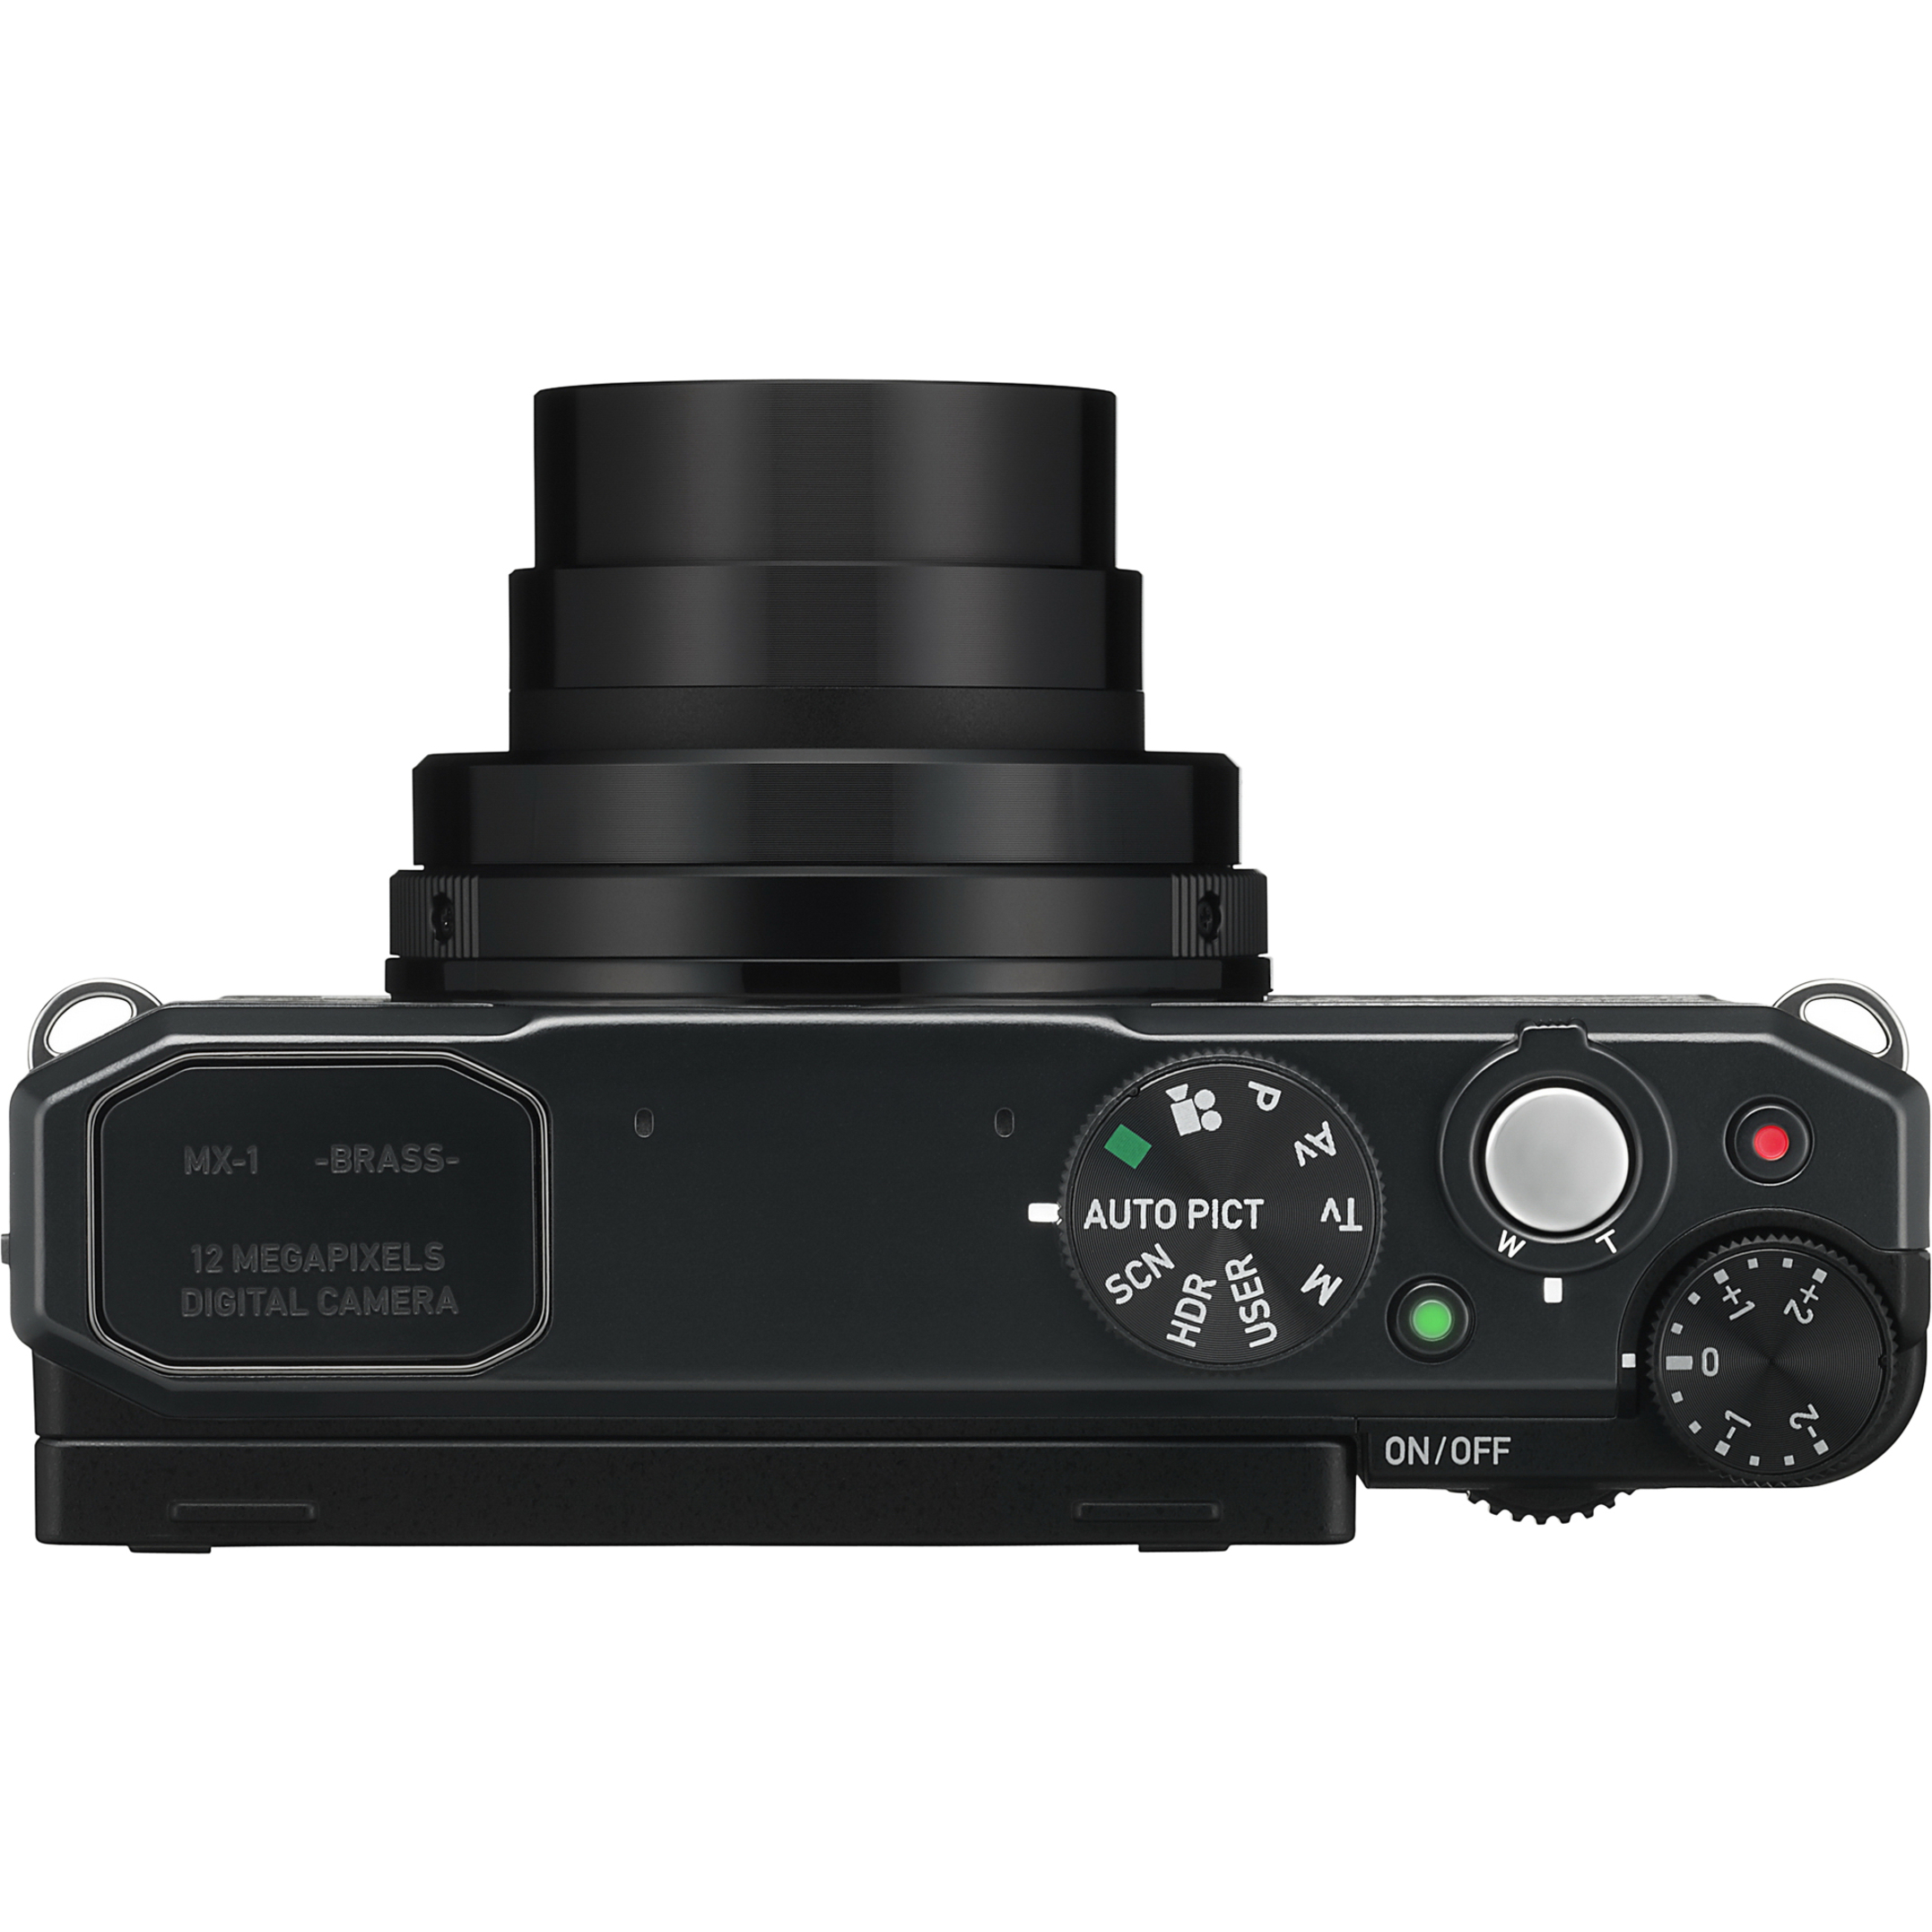 Pentax MX-1 12 Megapixel Compact Camera, Black - image 2 of 6